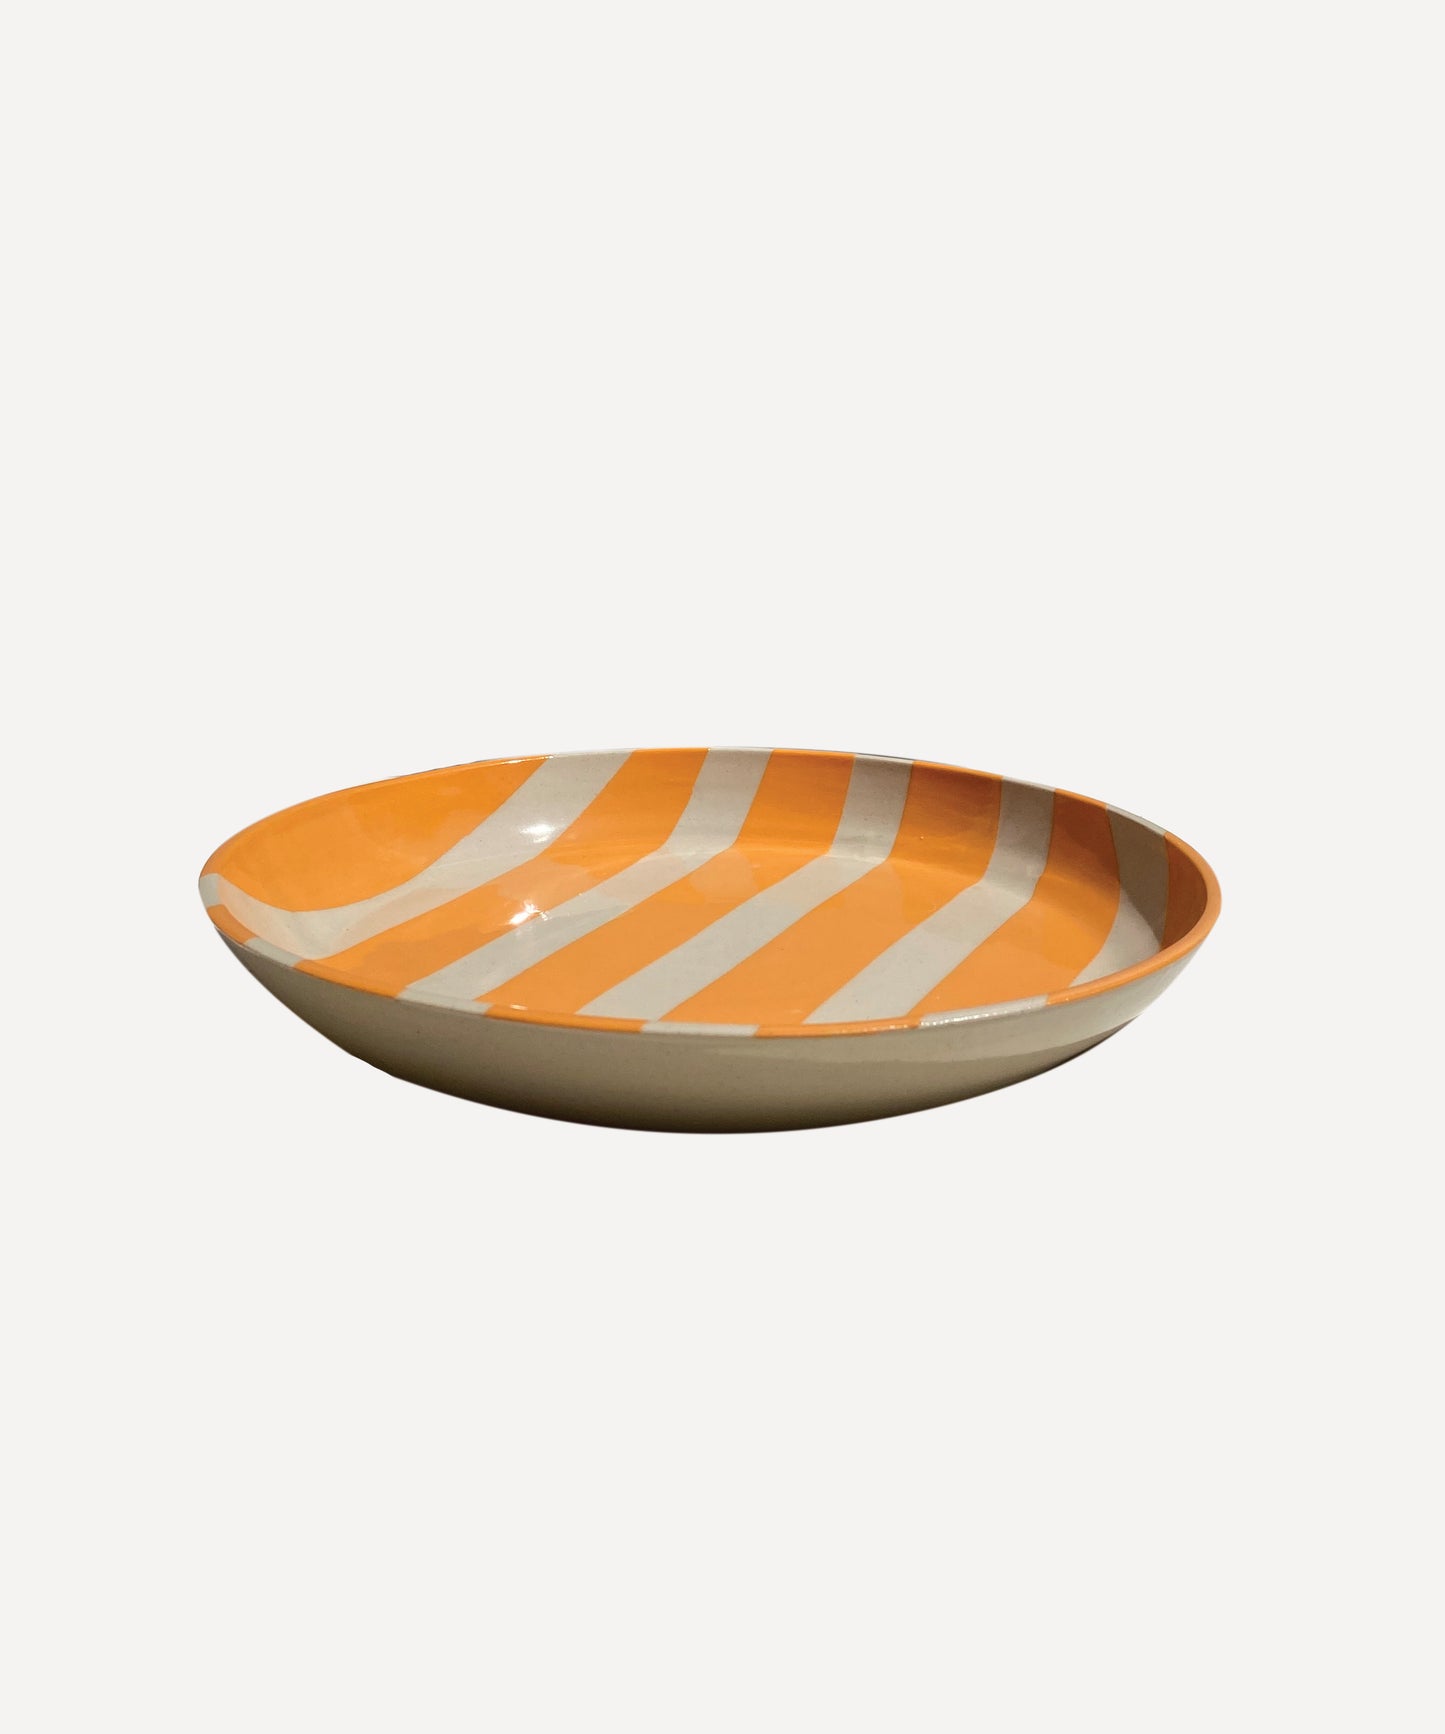 Duci Striped Bowl in Orange